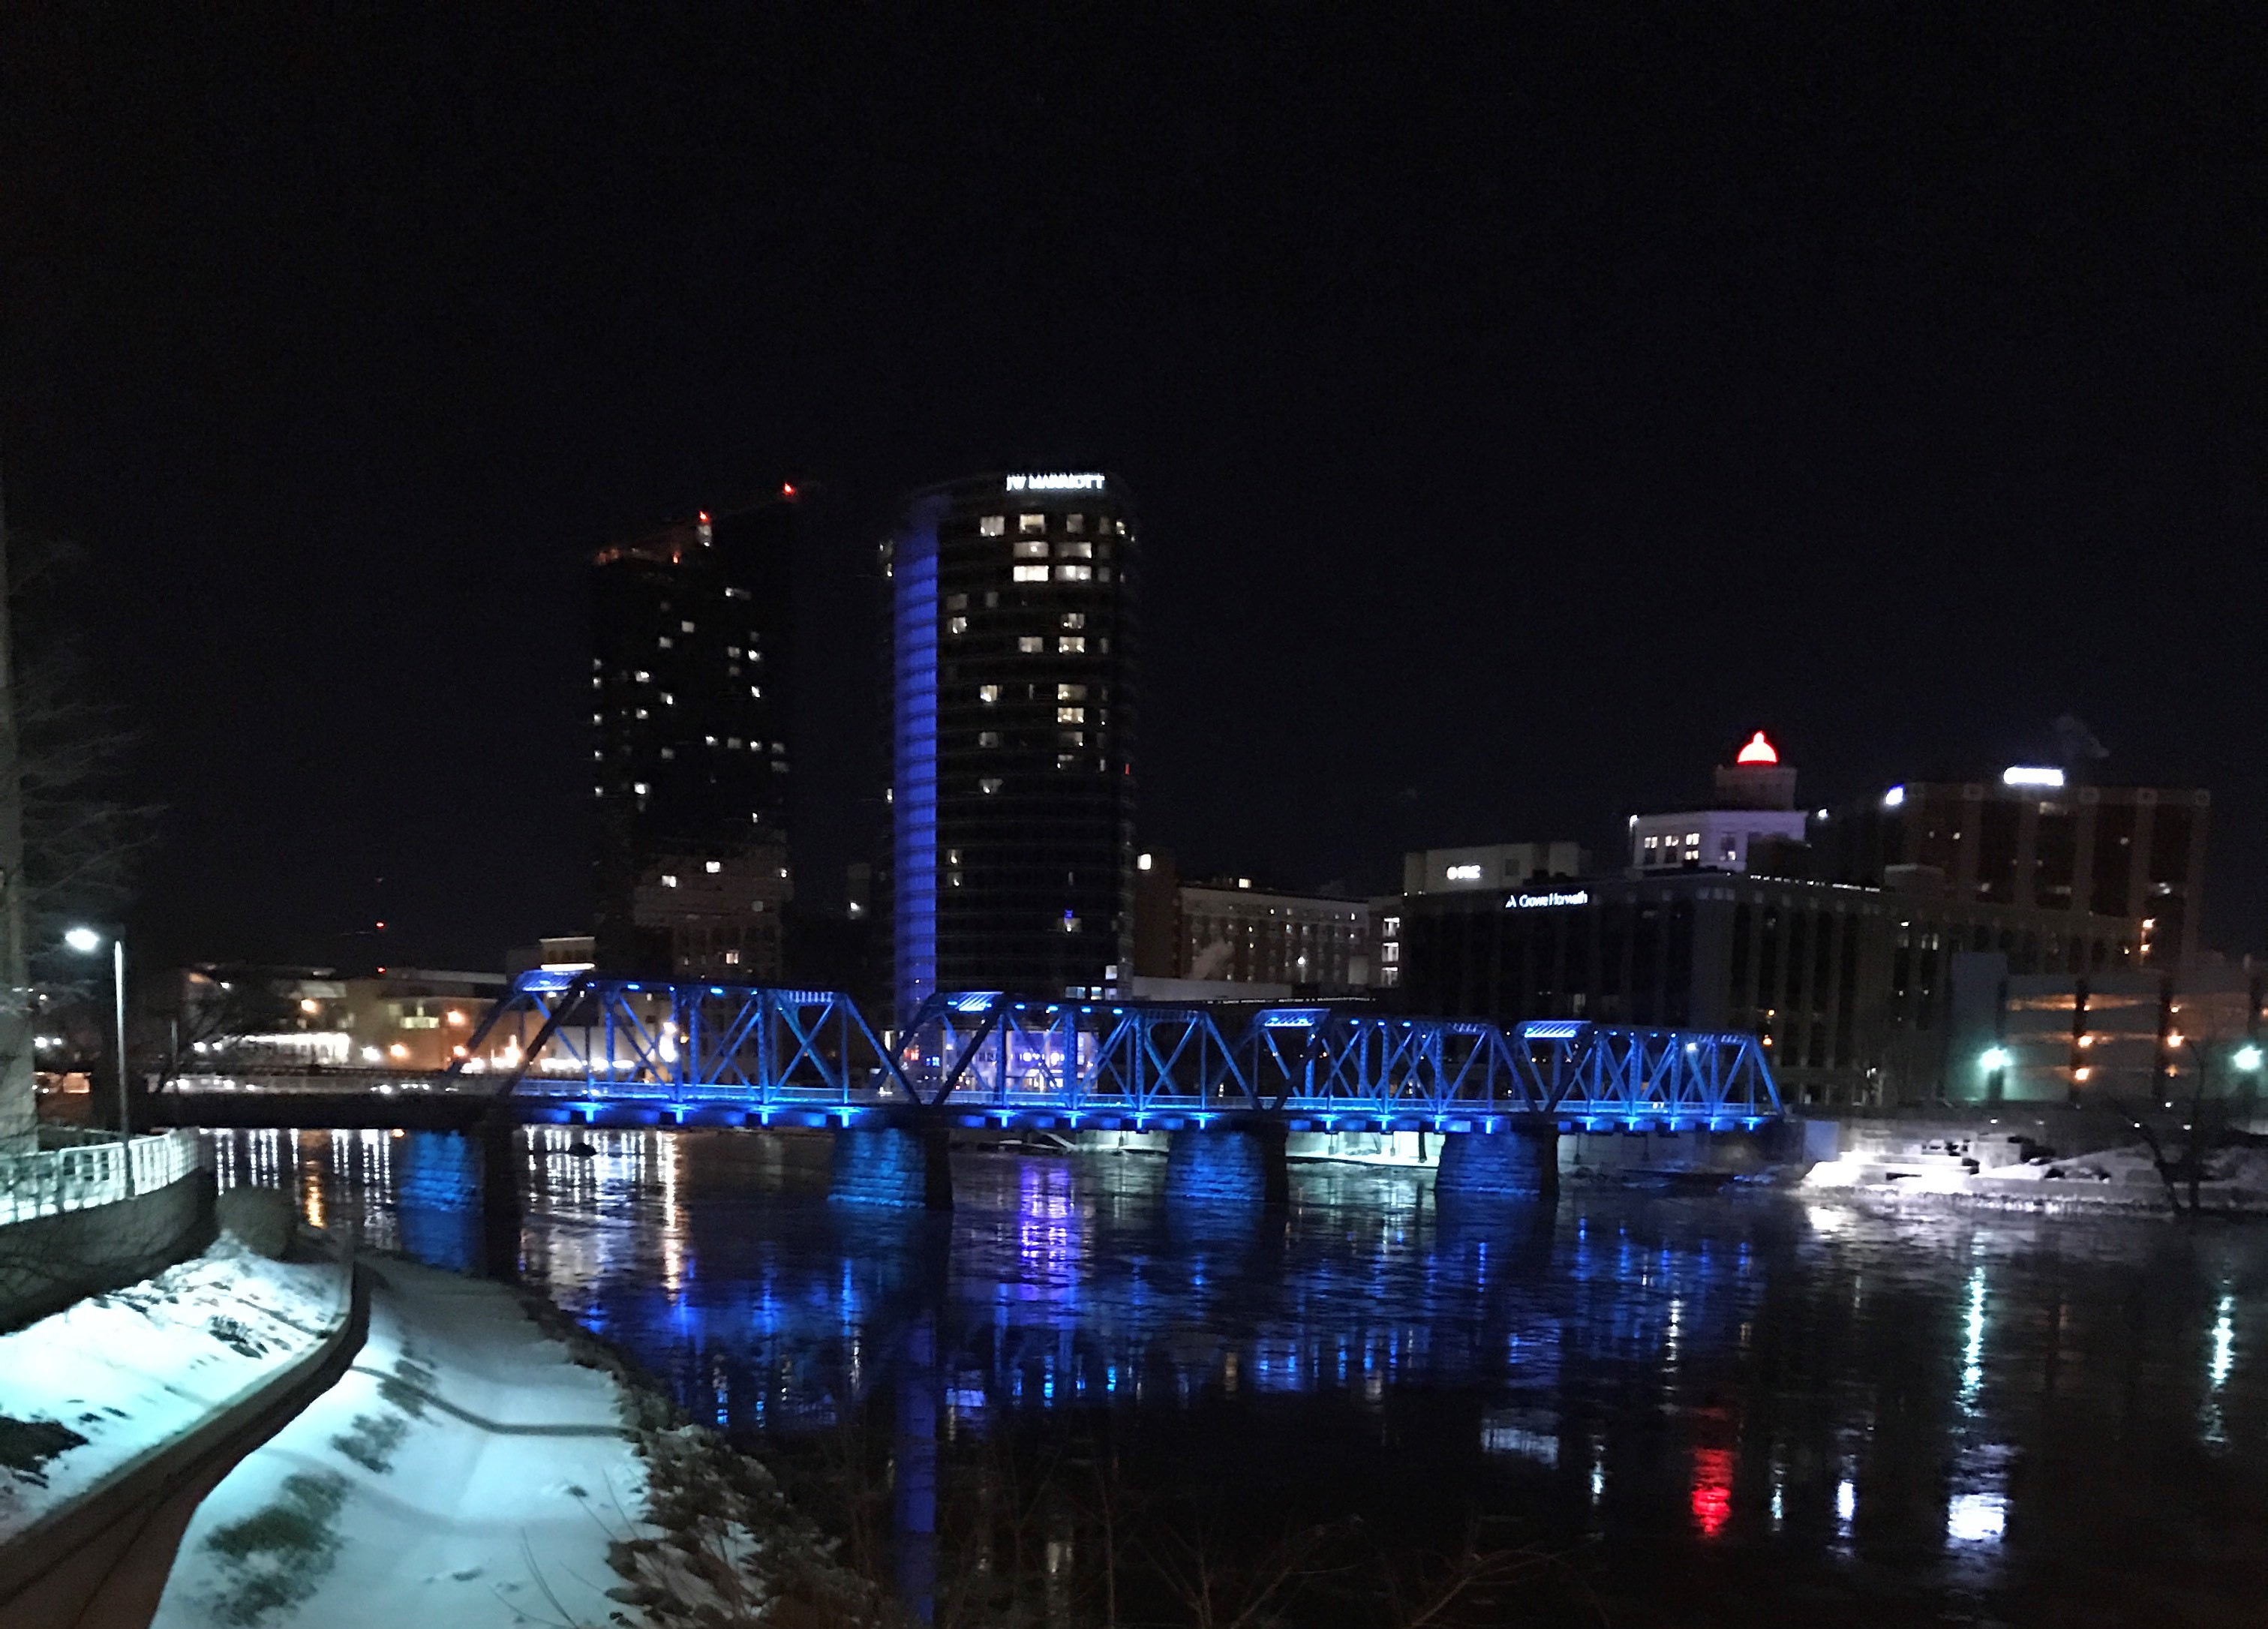 The Blue Bridge lit up at night!